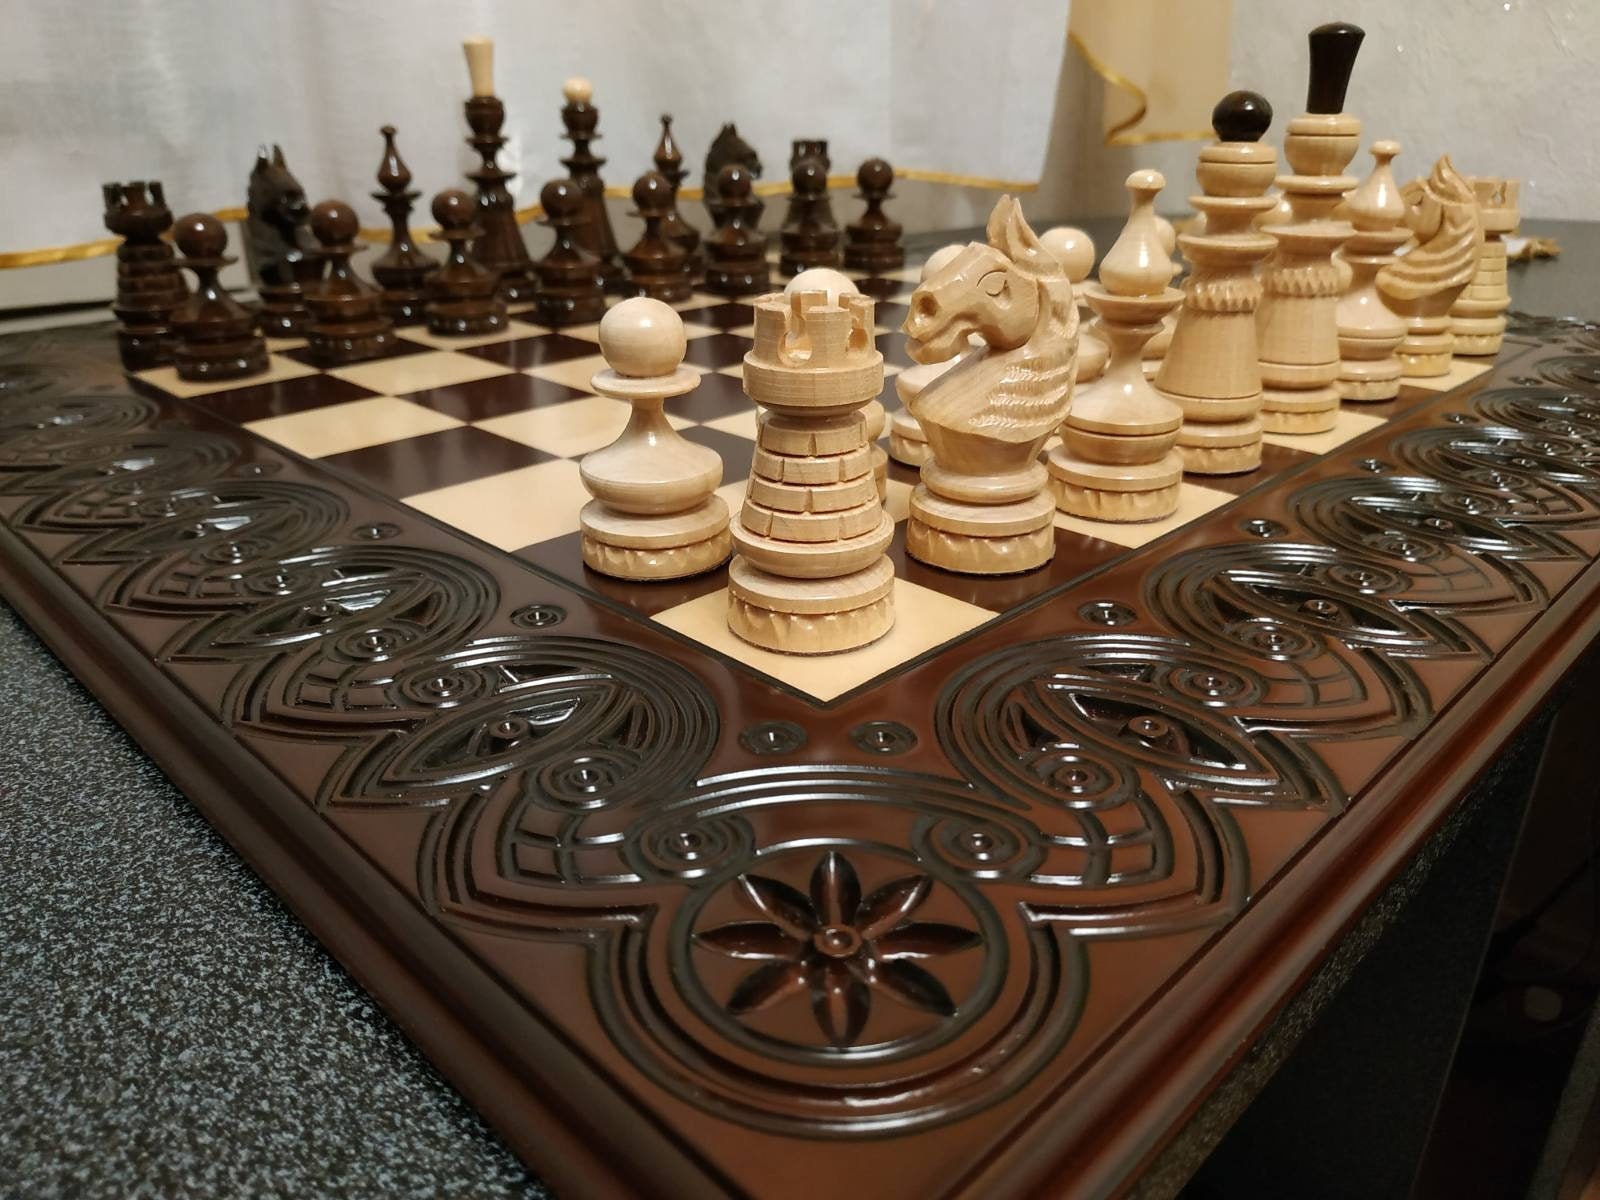 WE Games Folding Wood Travel Chess Set- 11.5 in Walnut Veneer Board